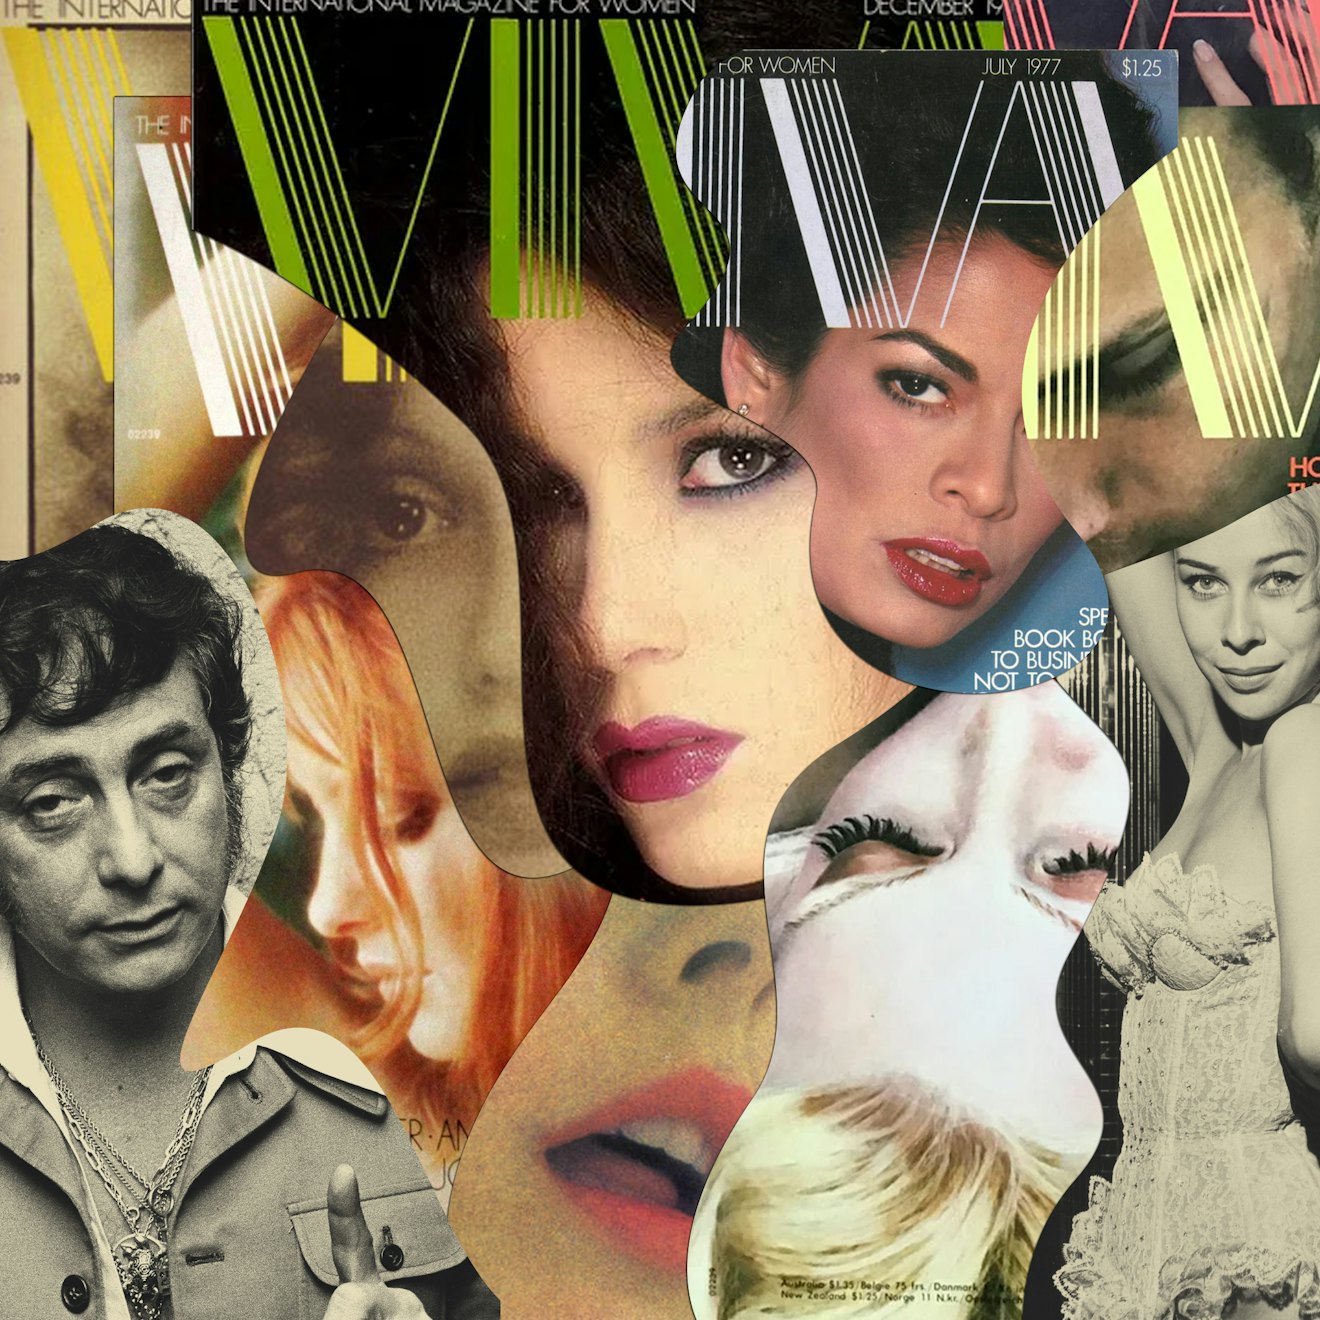 1970s Porn Magazines - Stiffed' Recalls 'Viva,' A 1970s Porn Magazine For Women